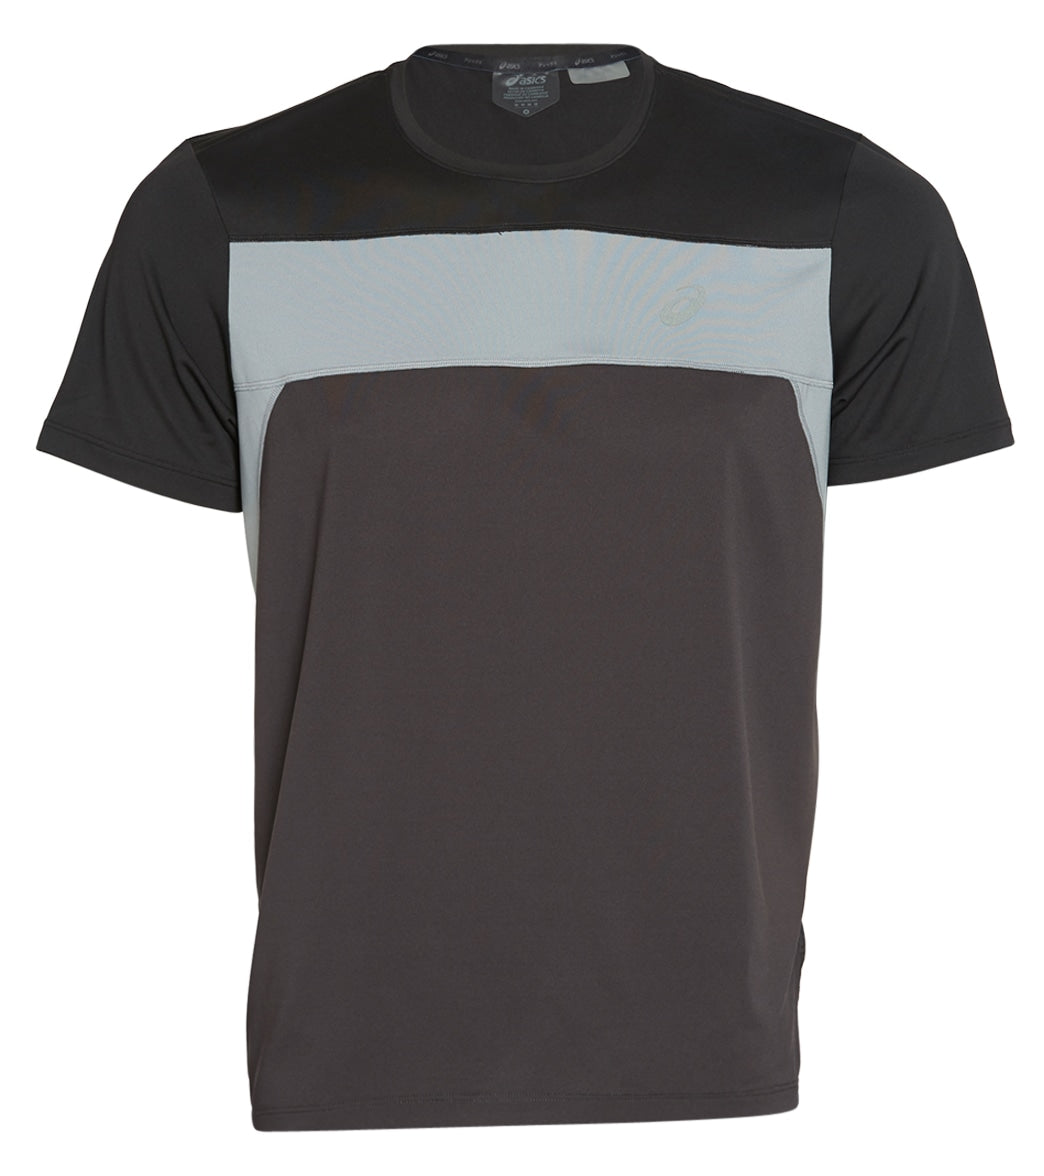 Asics Men's Race Short Sleeve Top Shirt - Graphite Grey/Performance Black Large Size Large Polyester - Swimoutlet.com